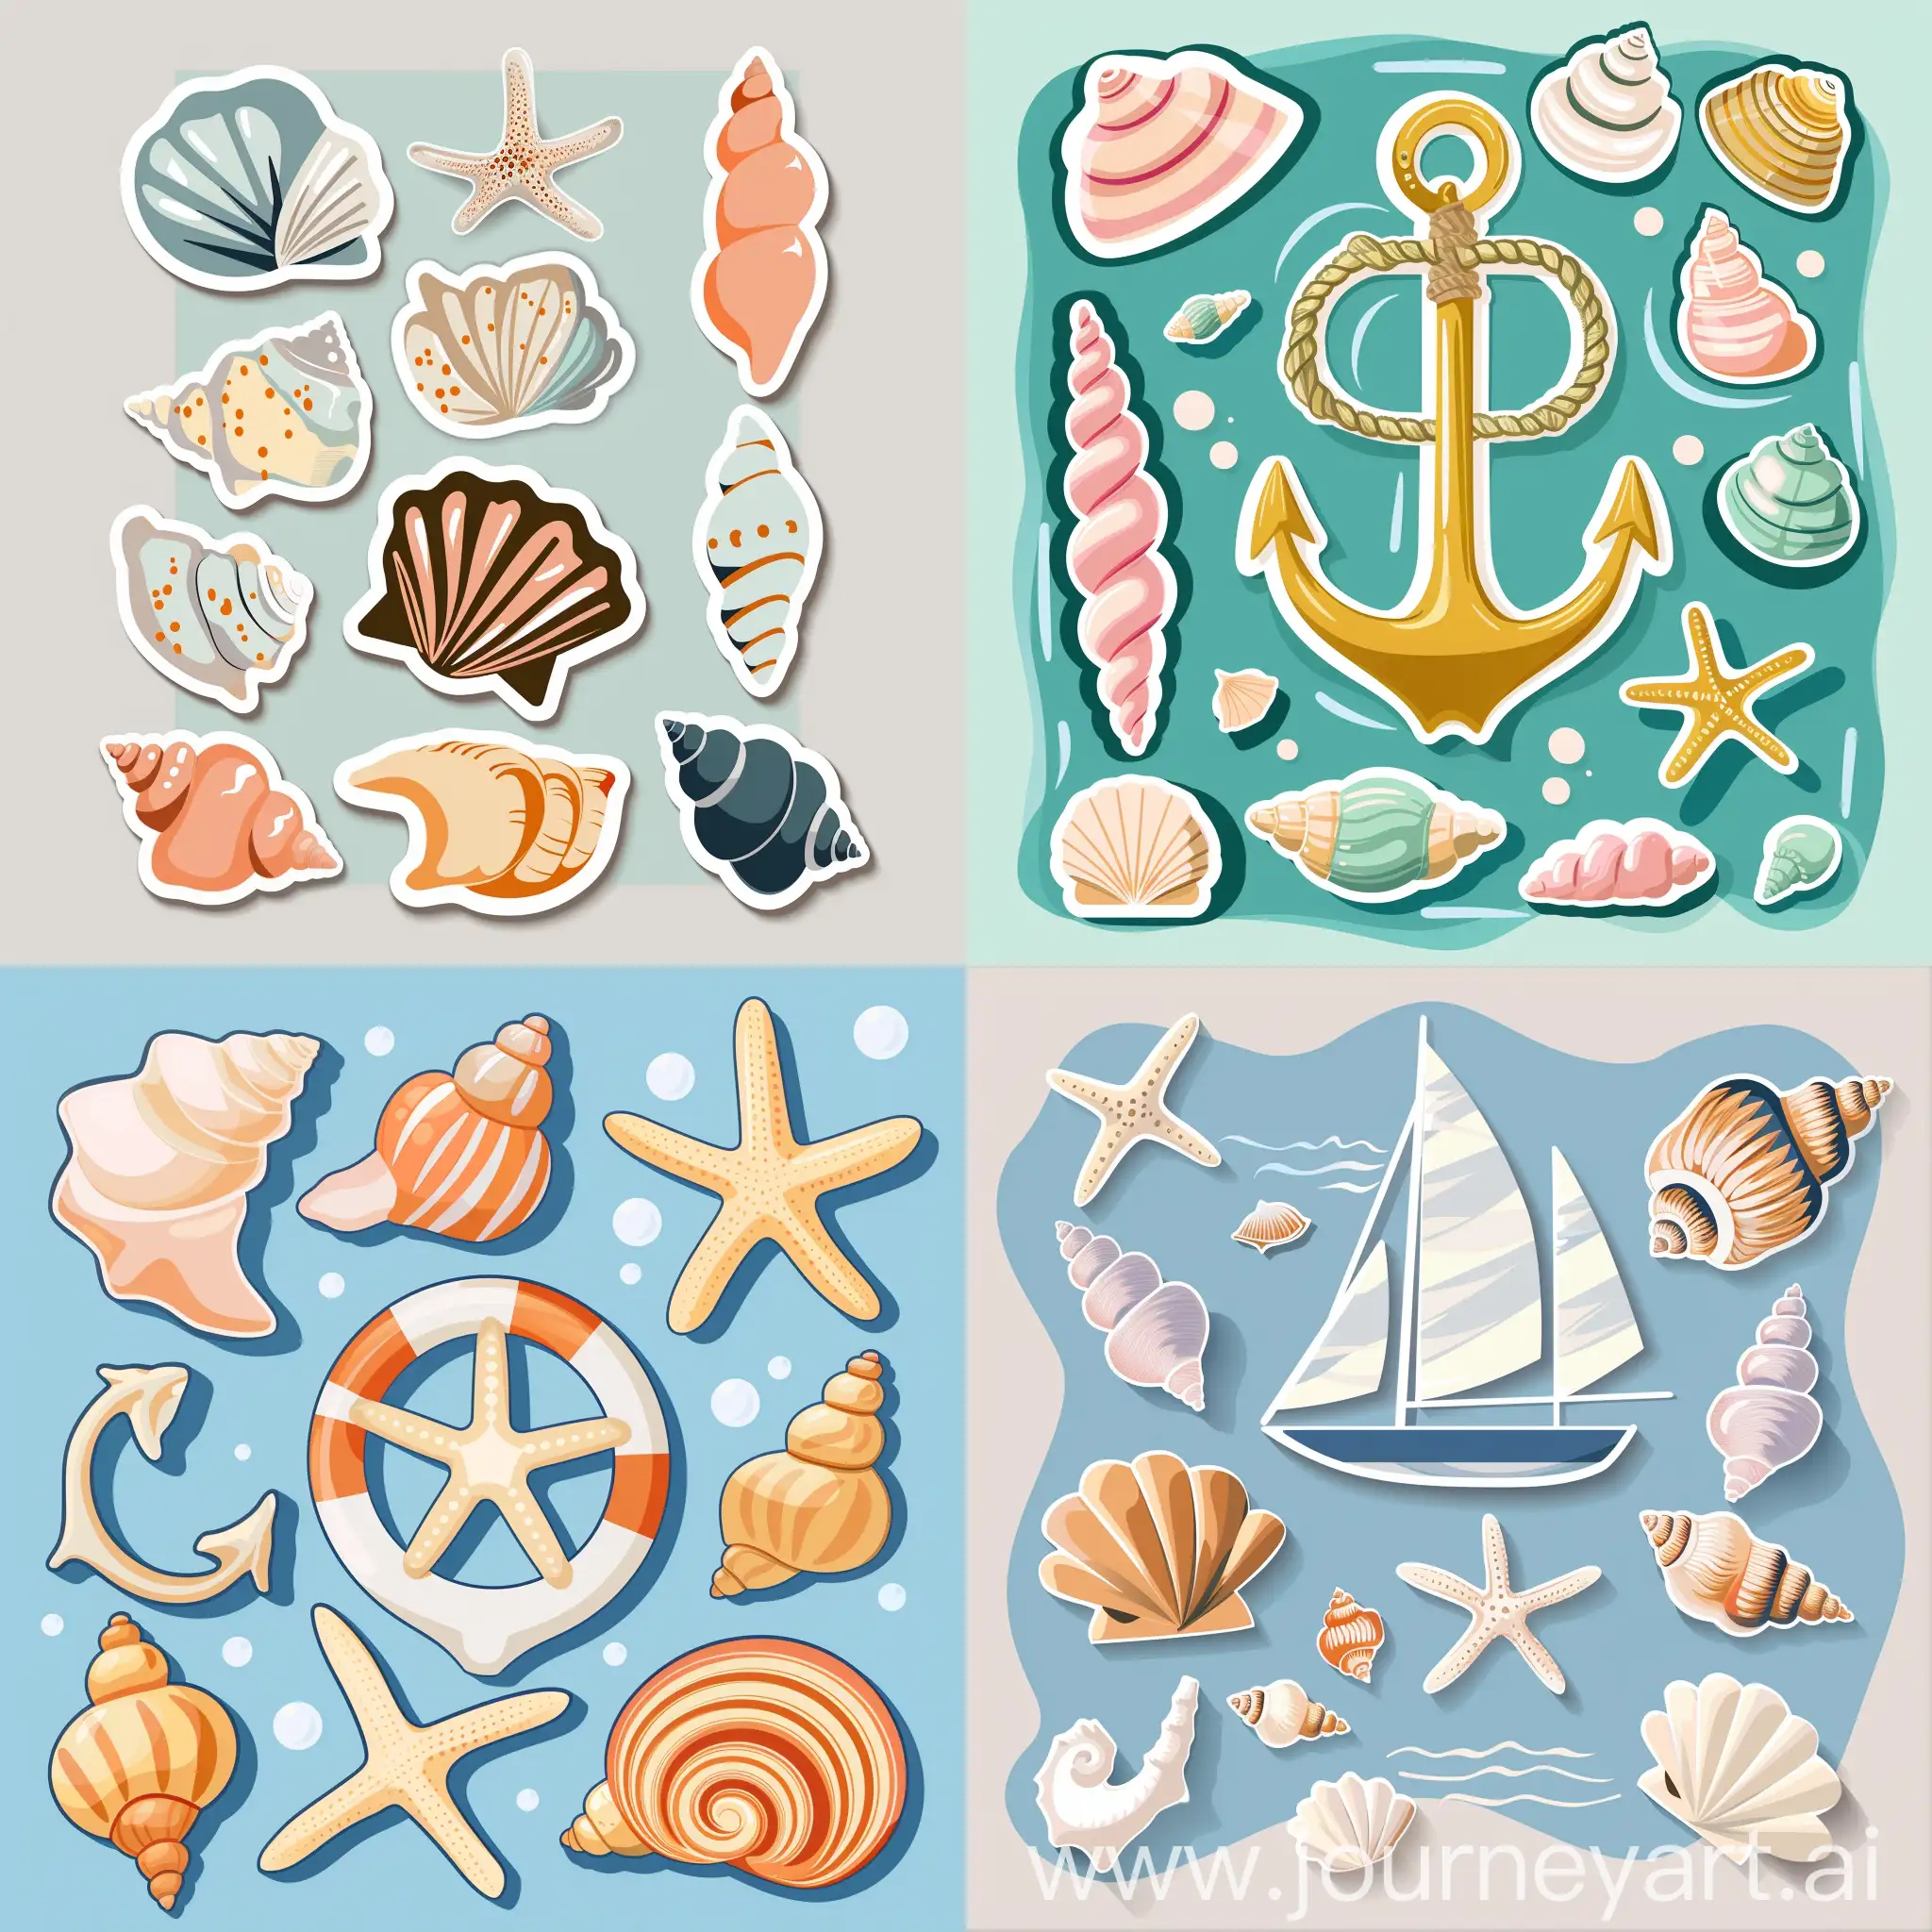 NauticalThemed-Beachside-Sticker-Design-with-Seashell-Decor